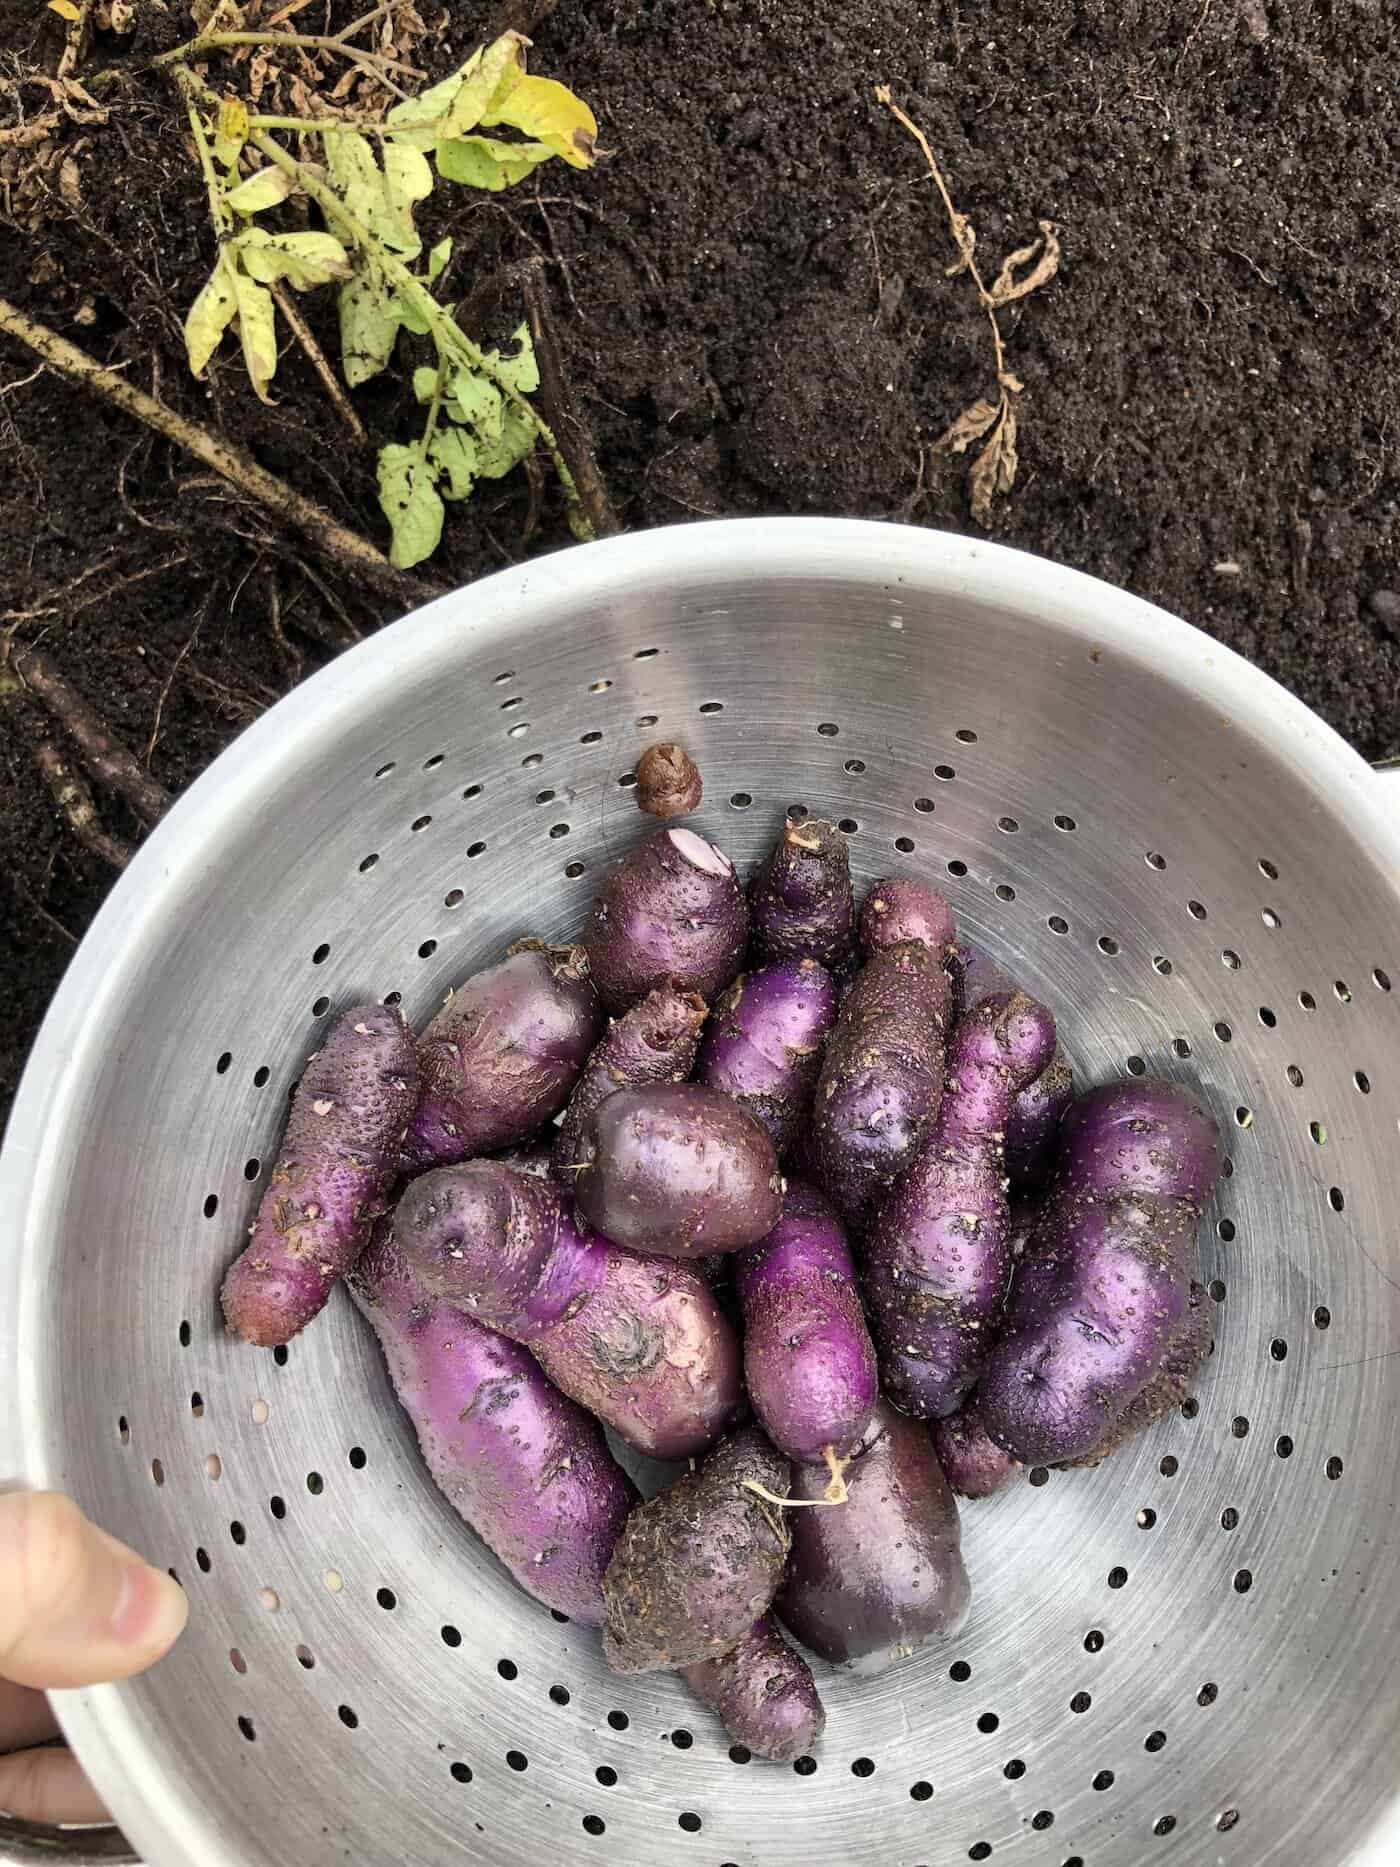 Harvesting mini purple potatoes